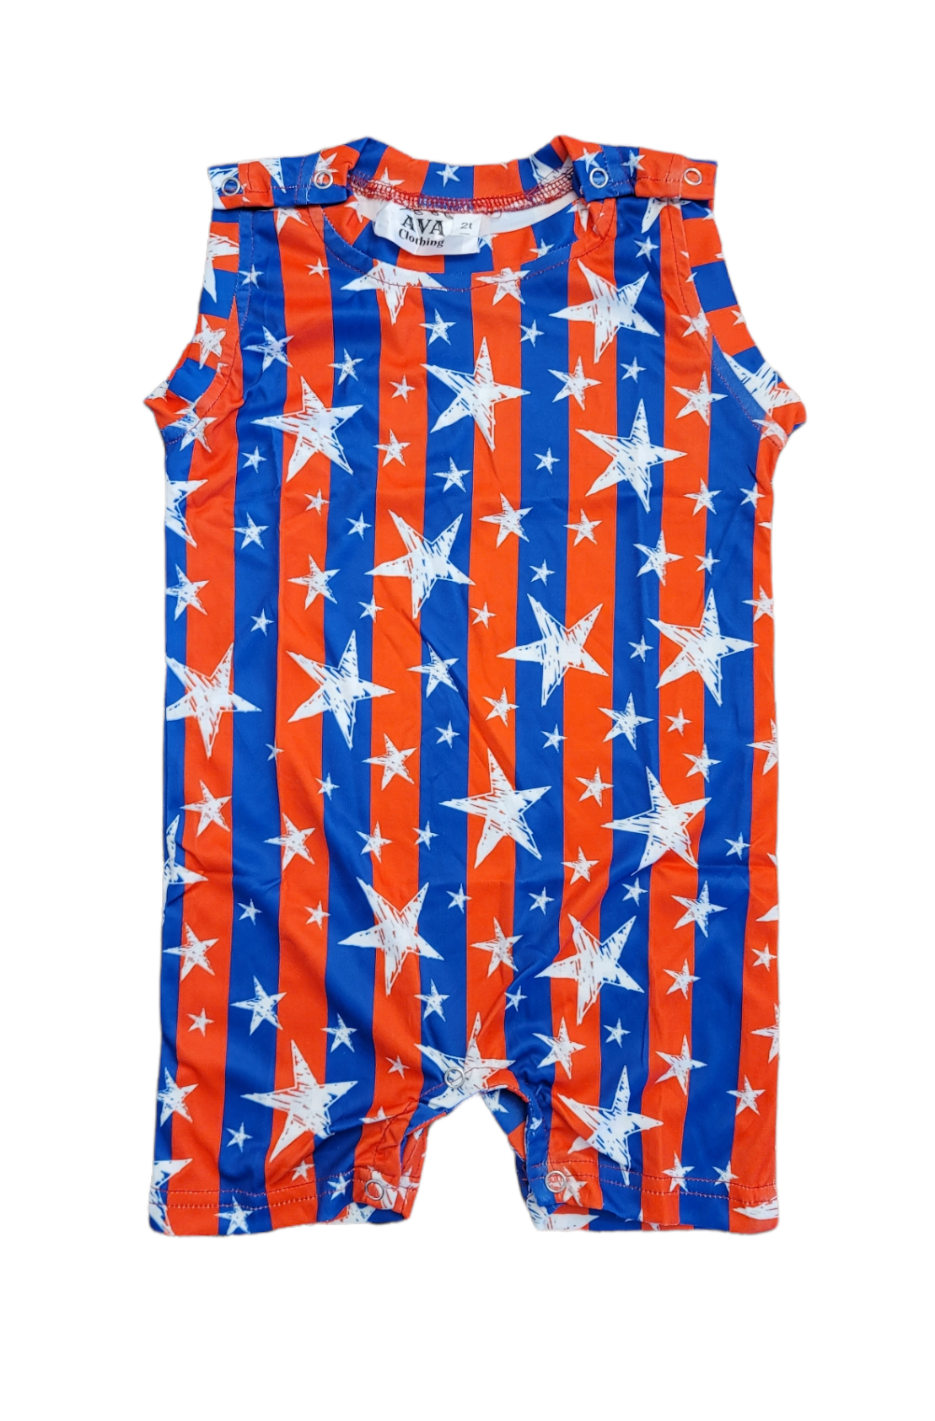 American Star Stripes Boys Tank Shorts Romper